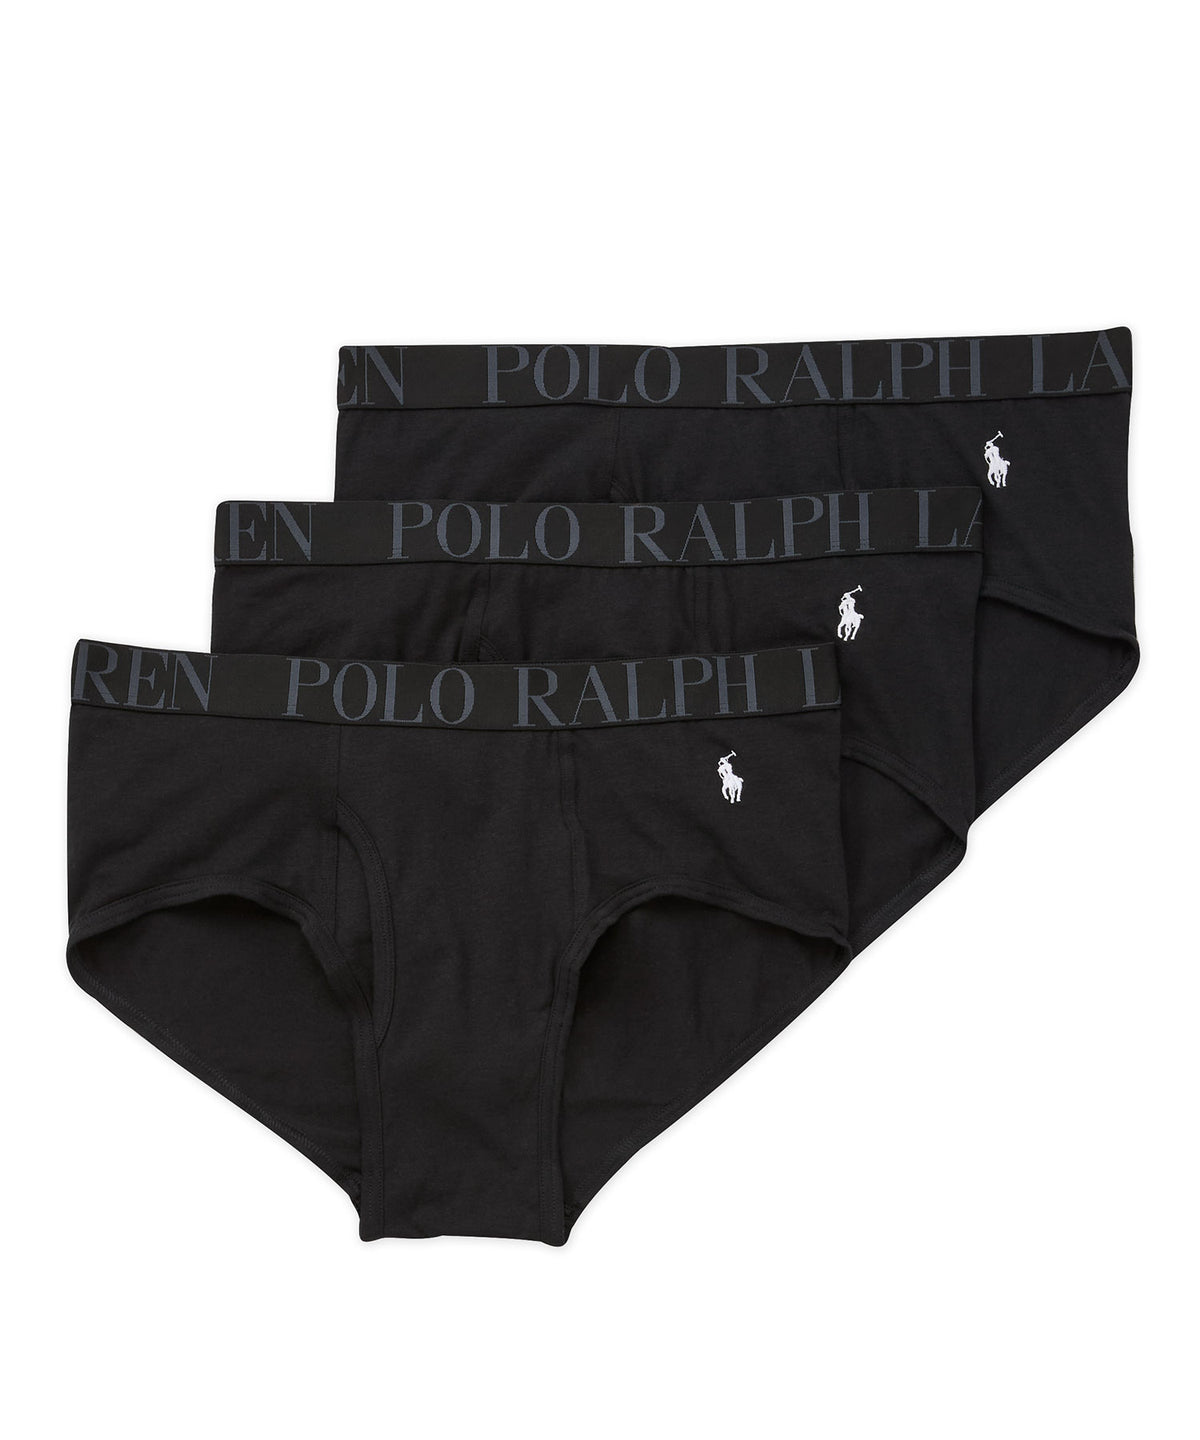 Polo Ralph Lauren - Slips classiques (paquet de 3), Men's Big & Tall